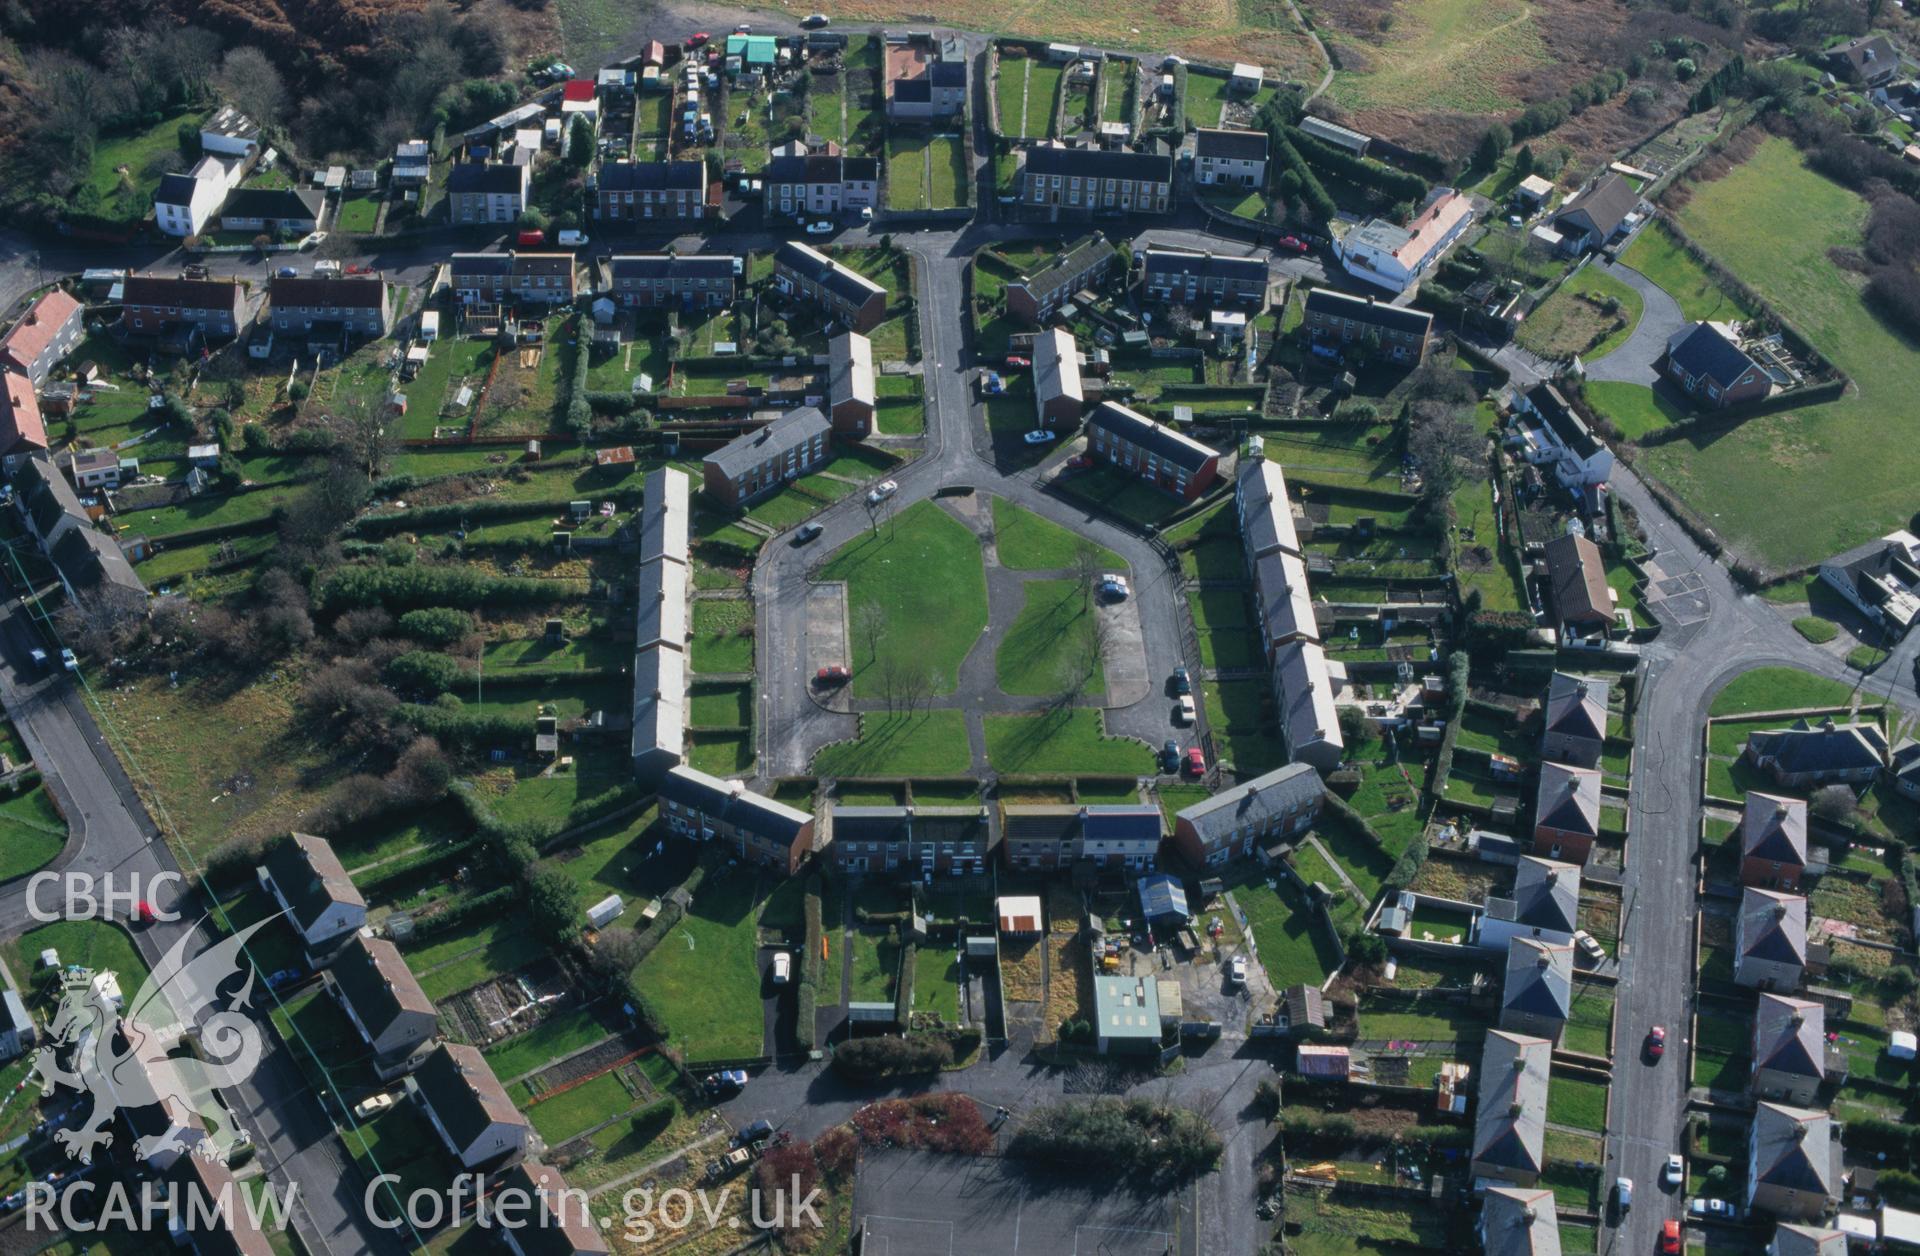 Slide of RCAHMW colour oblique aerial photograph of Craigwen, Llwynhendy, Llanelli, taken by C.R. Musson, 15/2/1997.